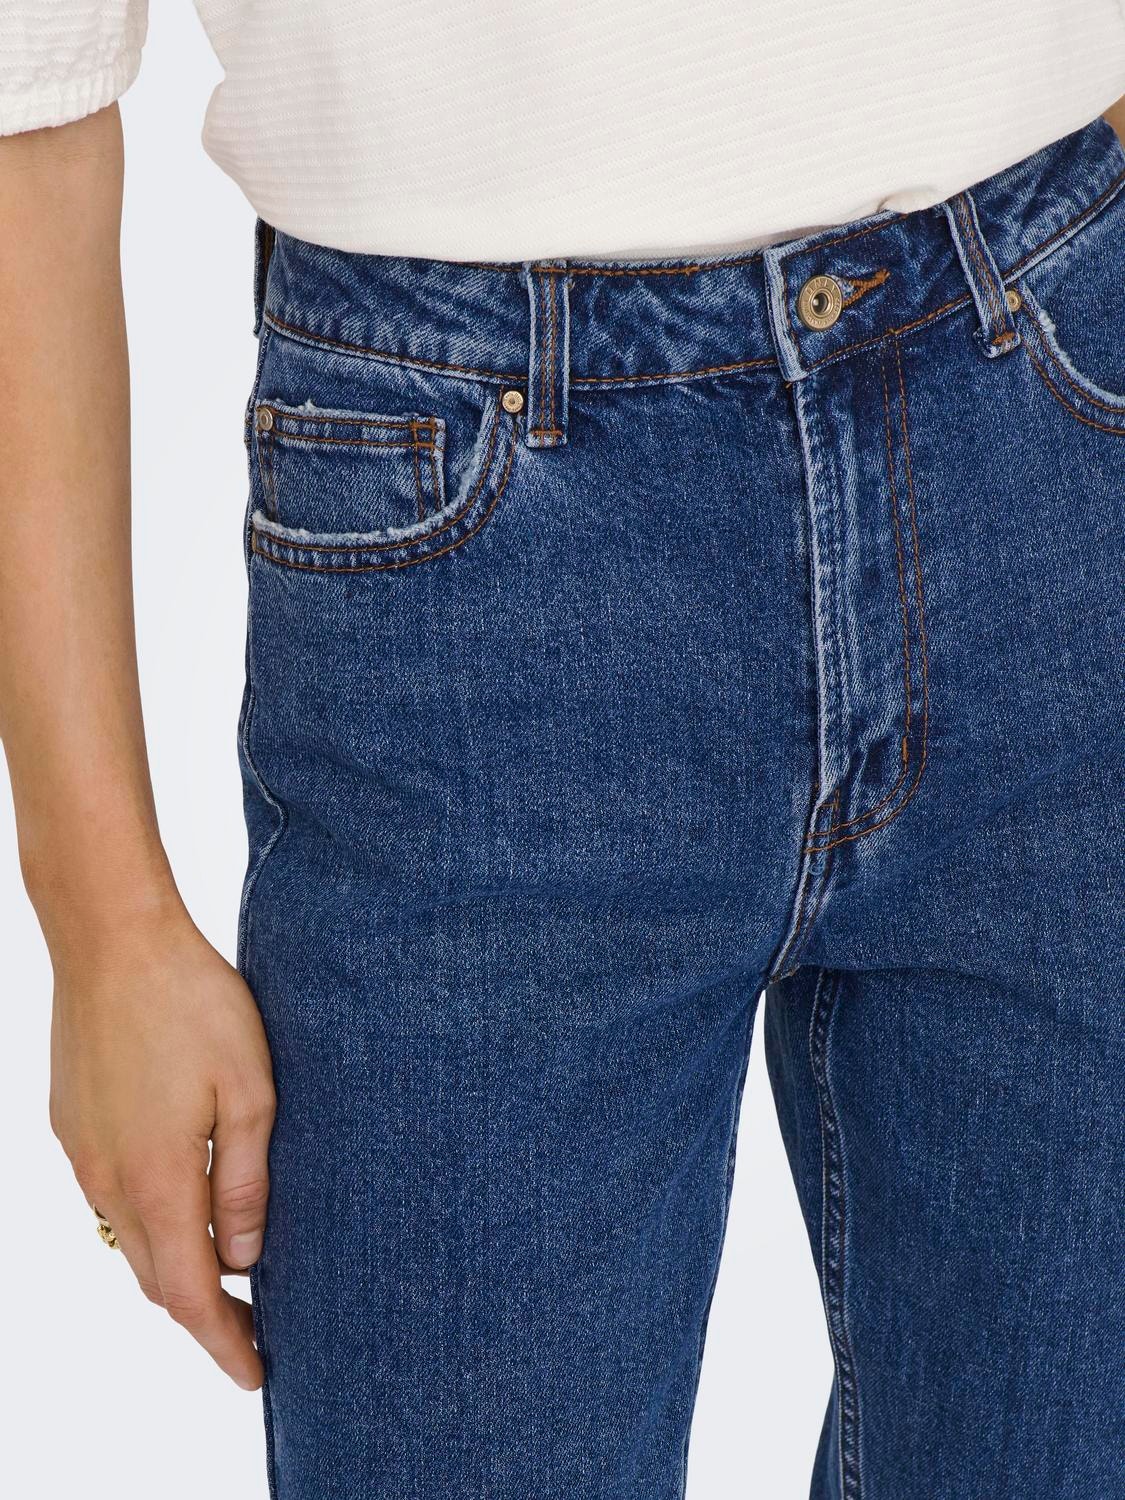 ONLY ONLEmily high waist Straight fit jeans -Dark Blue Denim - 15171549